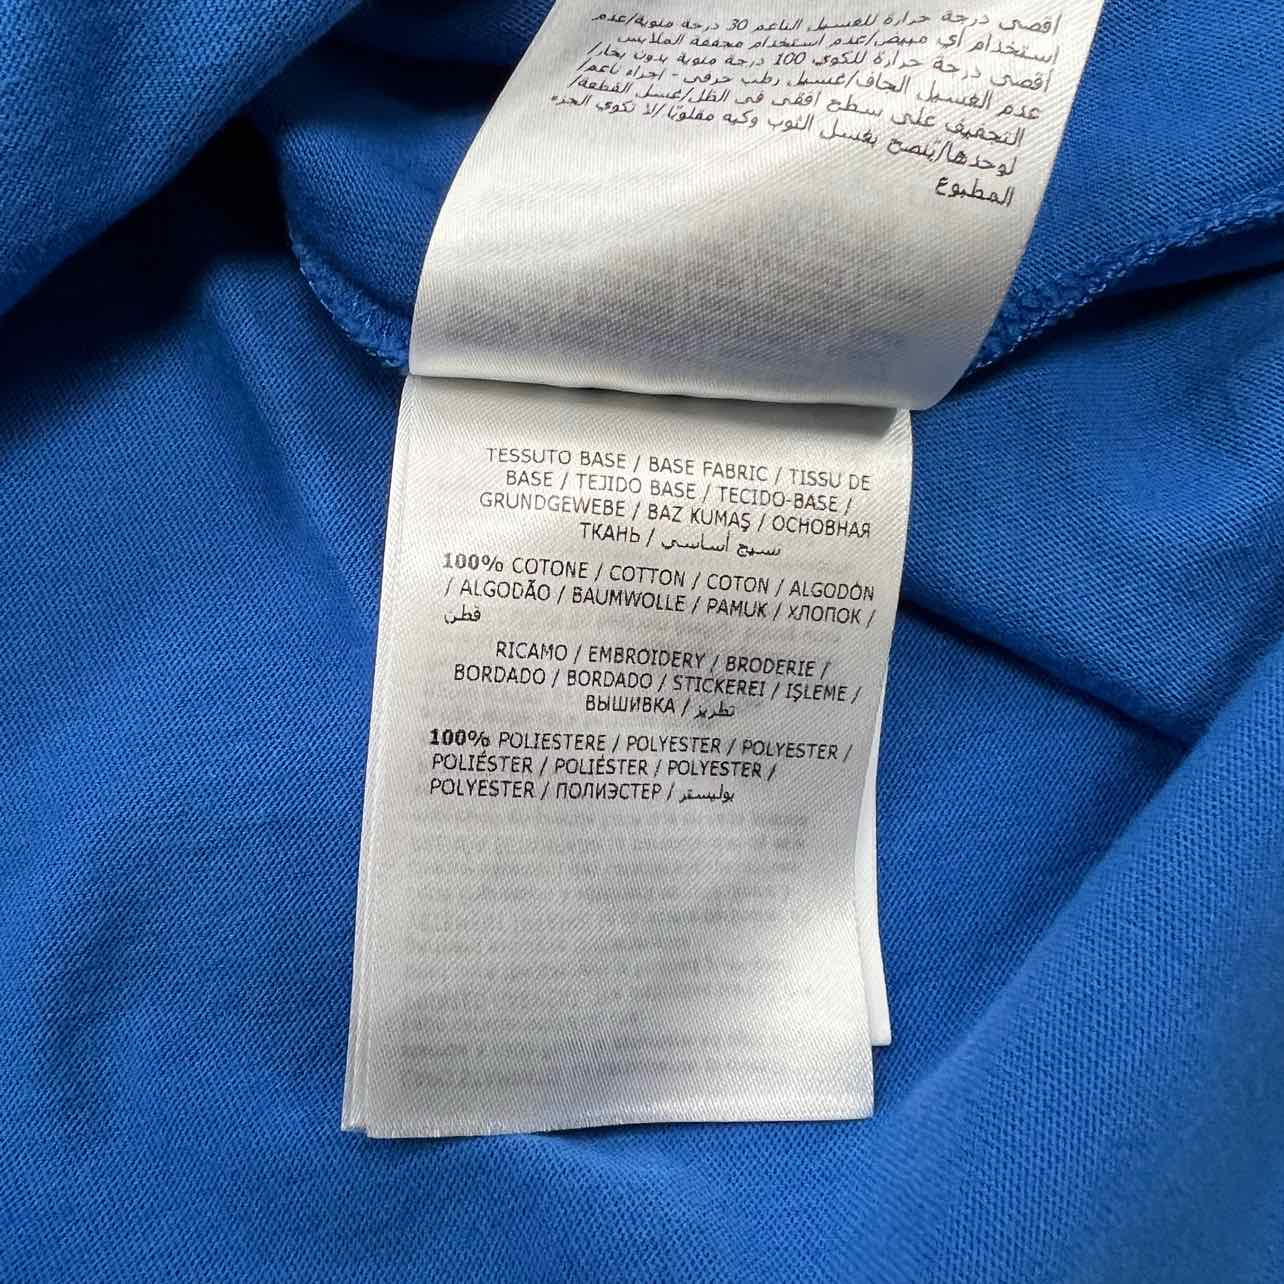 Moncler T-Shirt "CREST LOGO" Blue New Size S